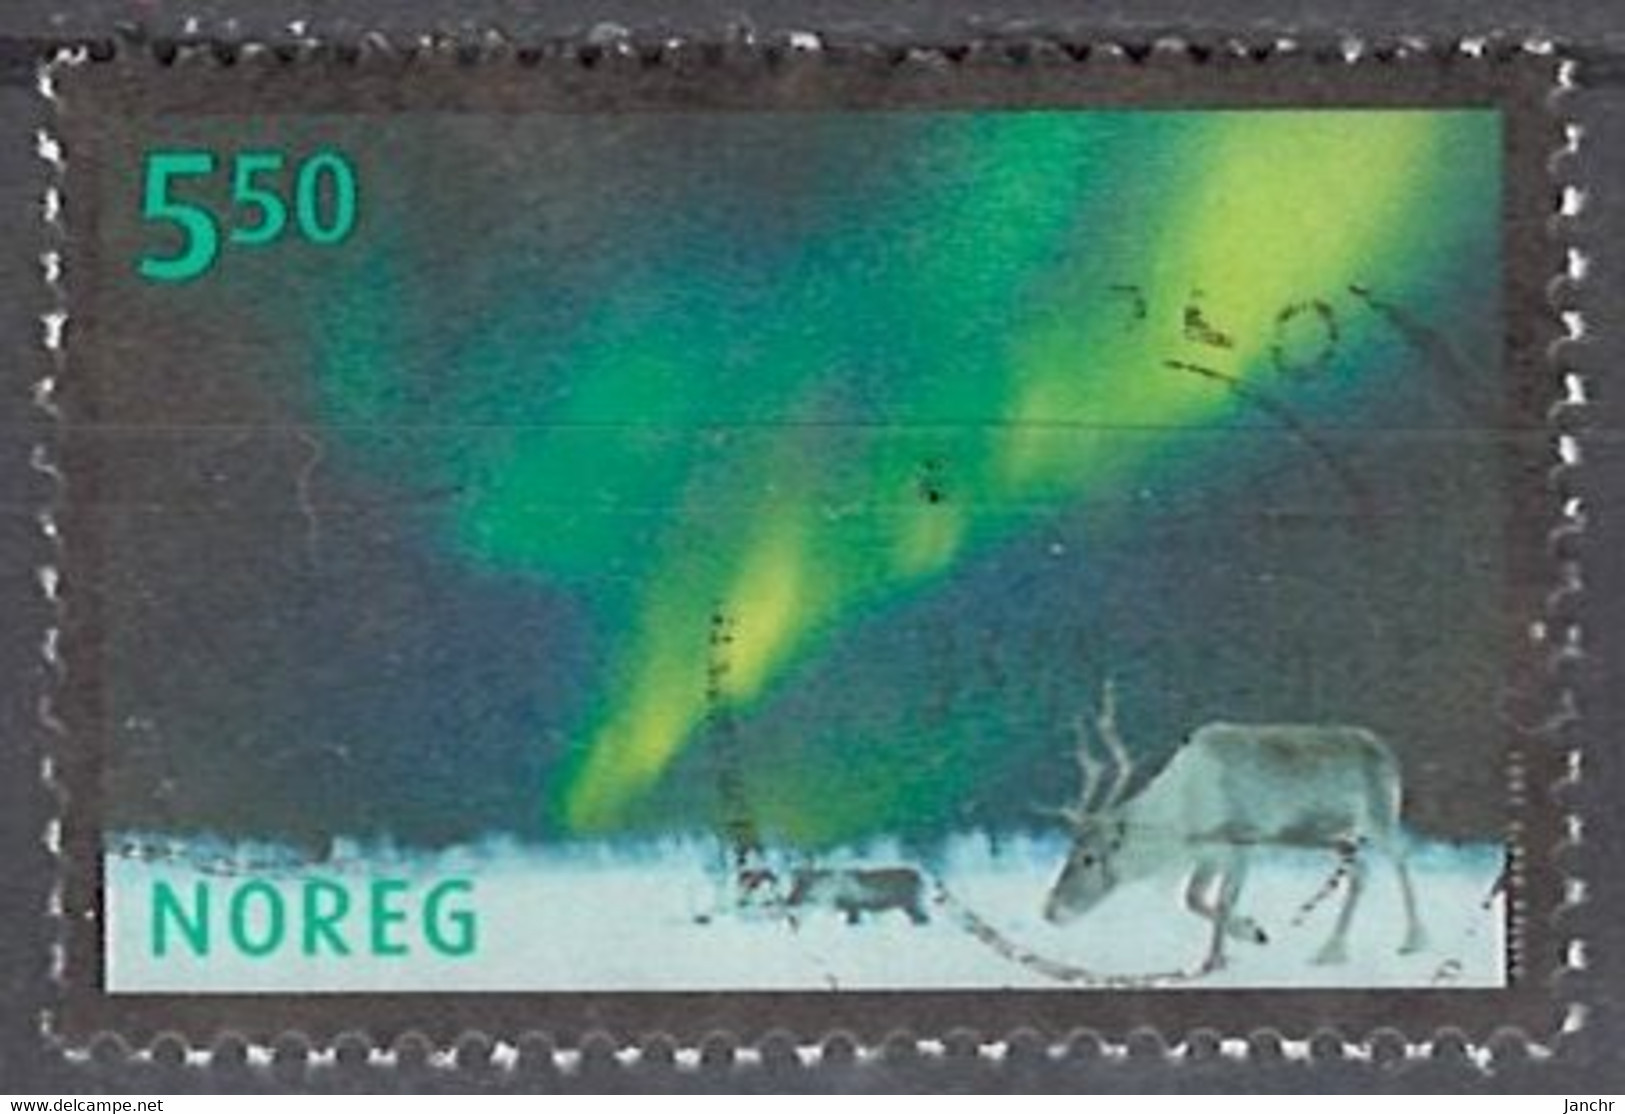 Norwegen Norway 2001. Mi.Nr. 1414, Used O - Used Stamps